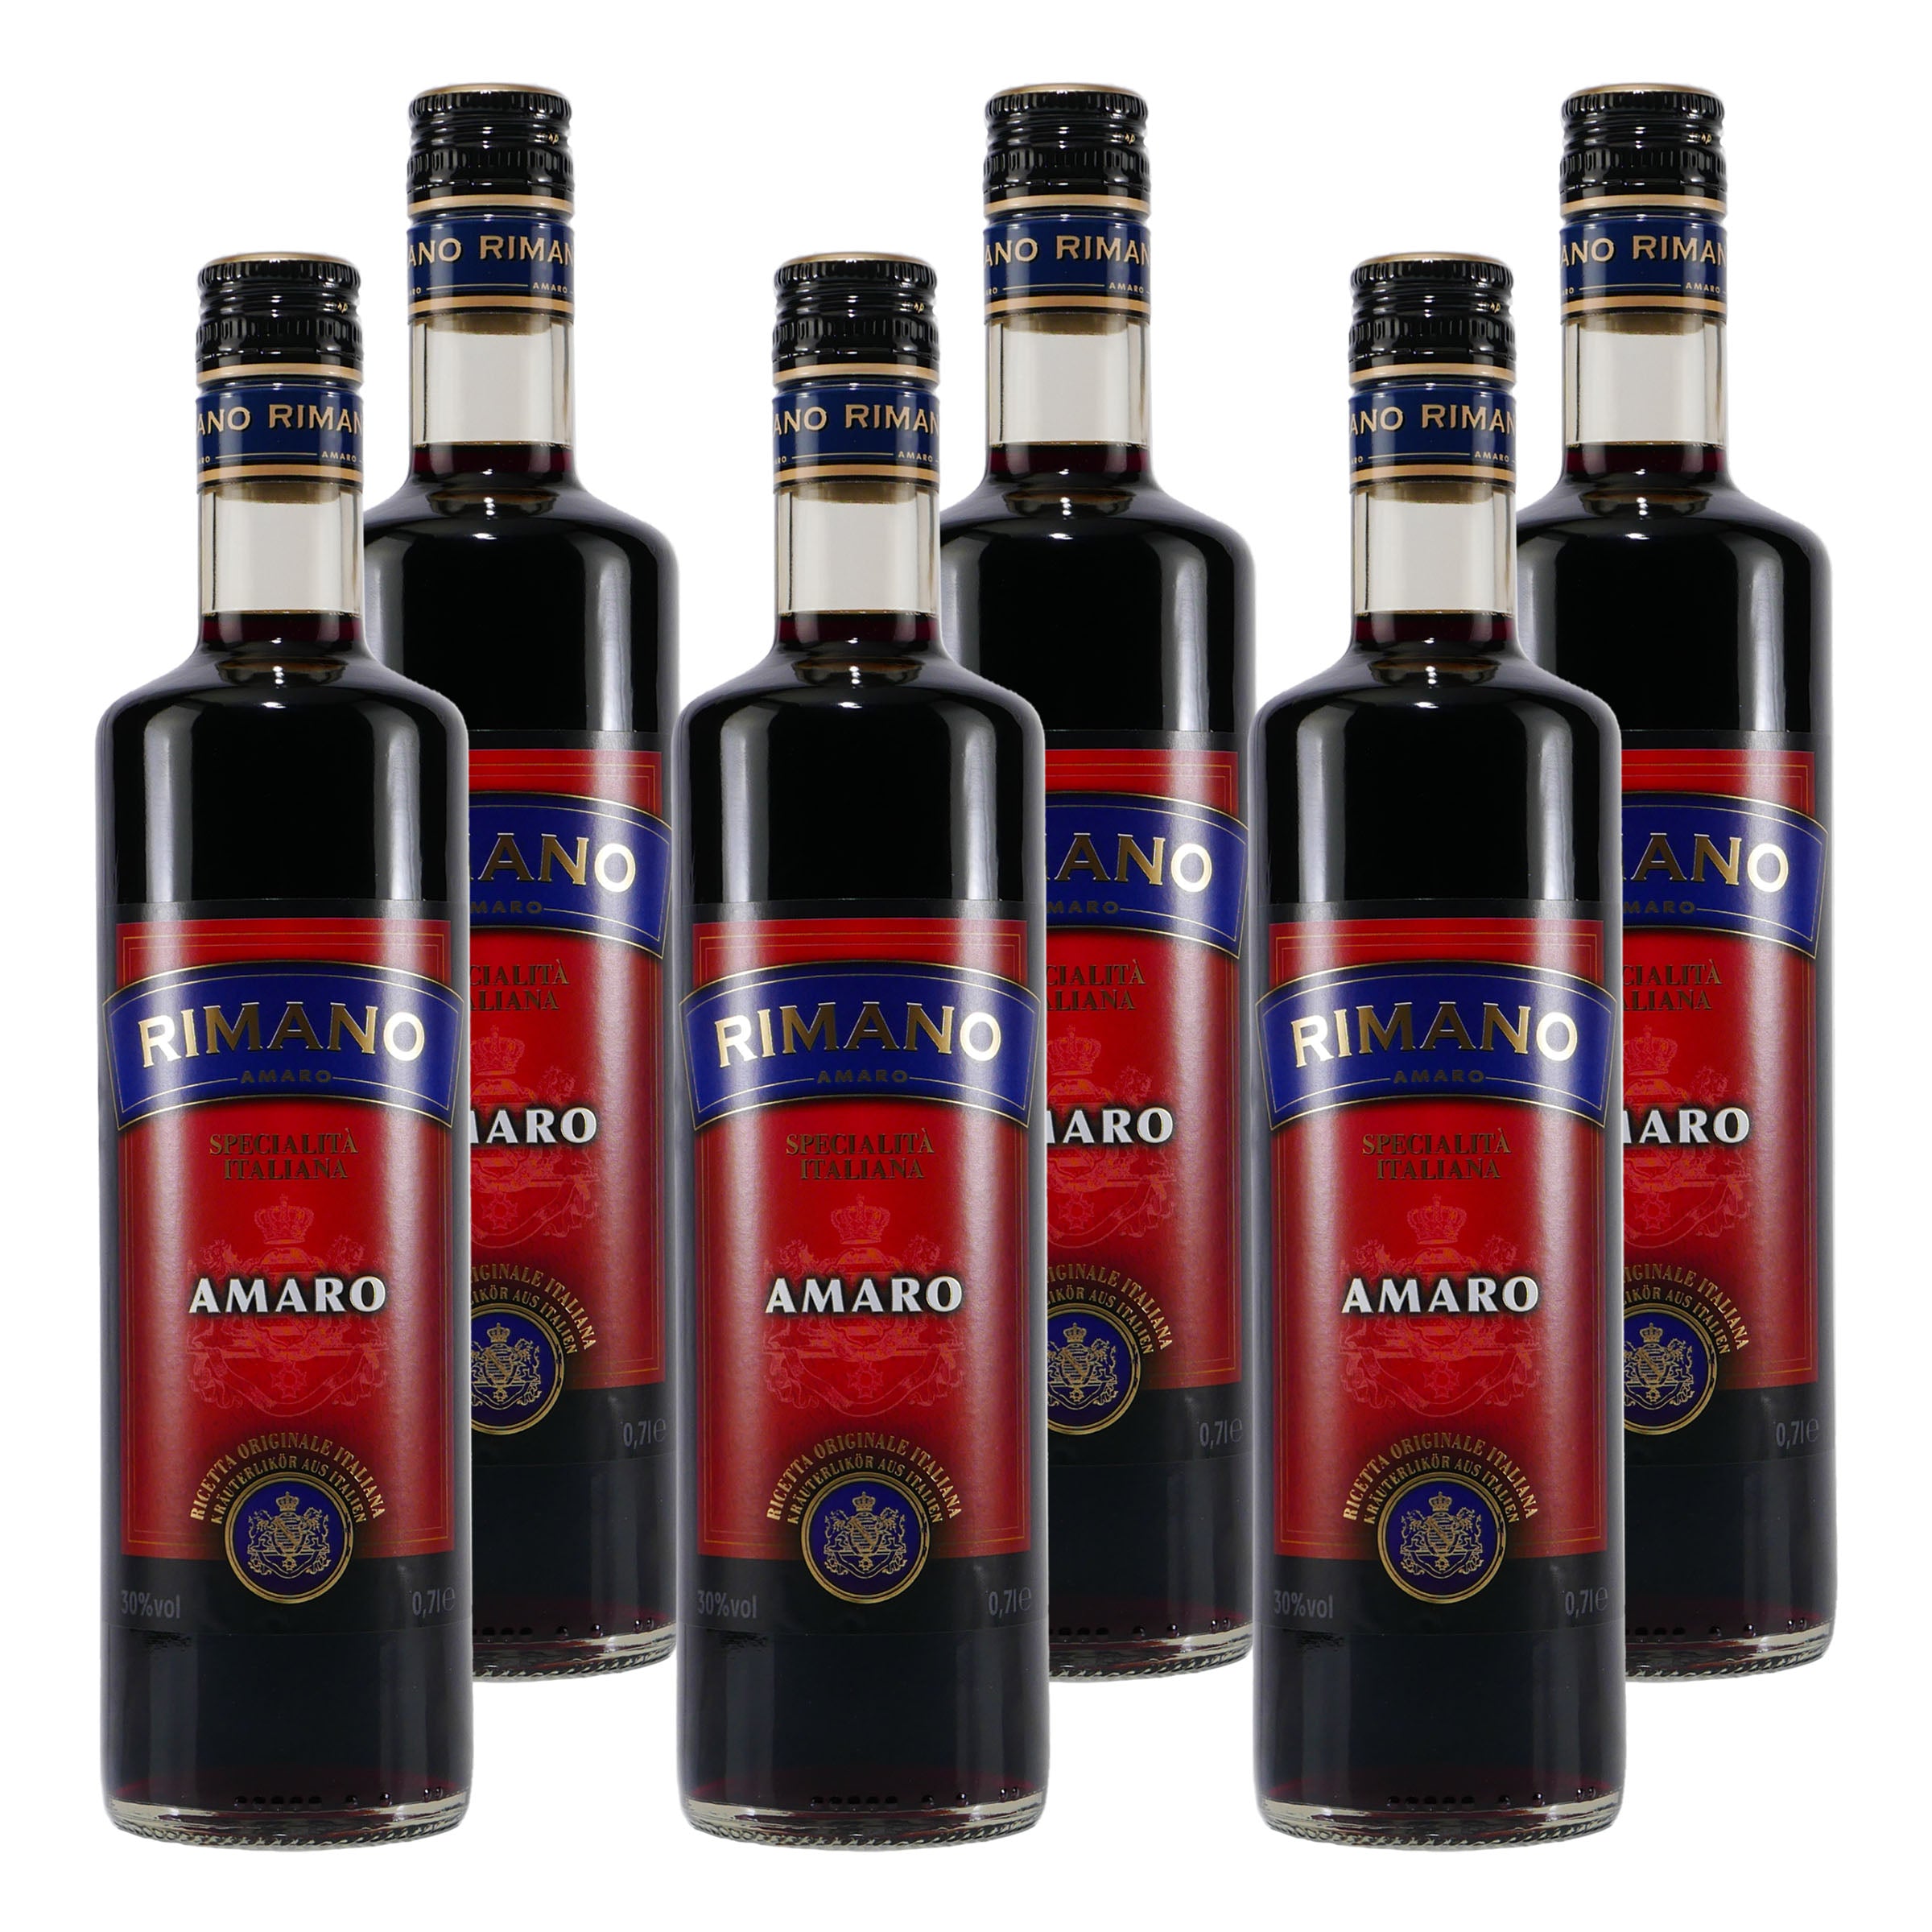 Rimano Amaro Kräuterlikör (6 x 0,7L)